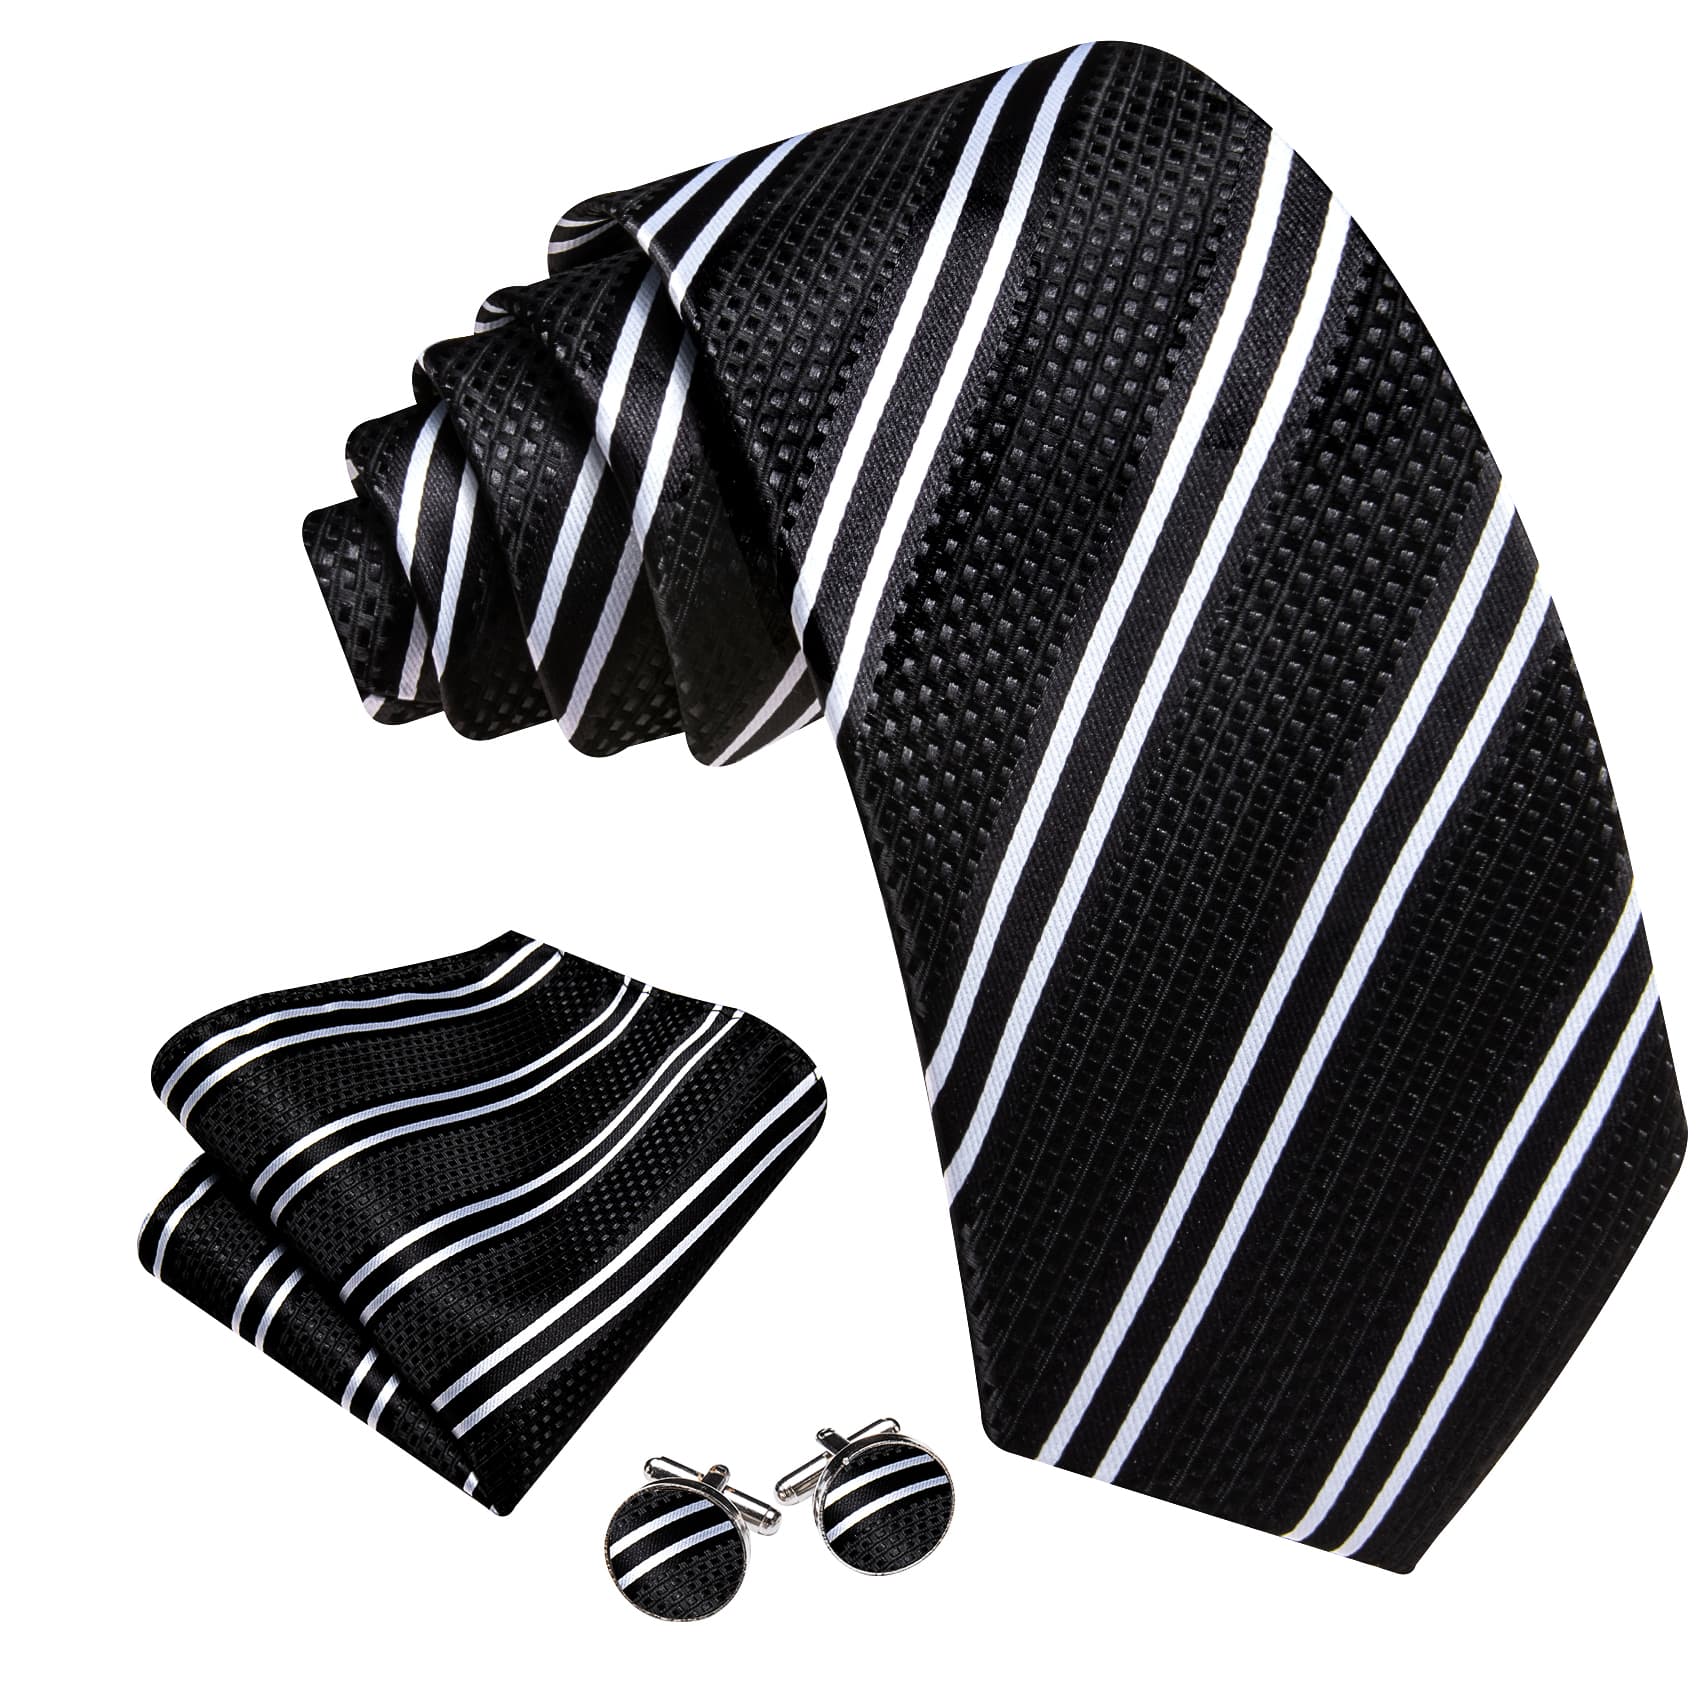  Mens Striped Tie Black Necktie Set with White Stripes